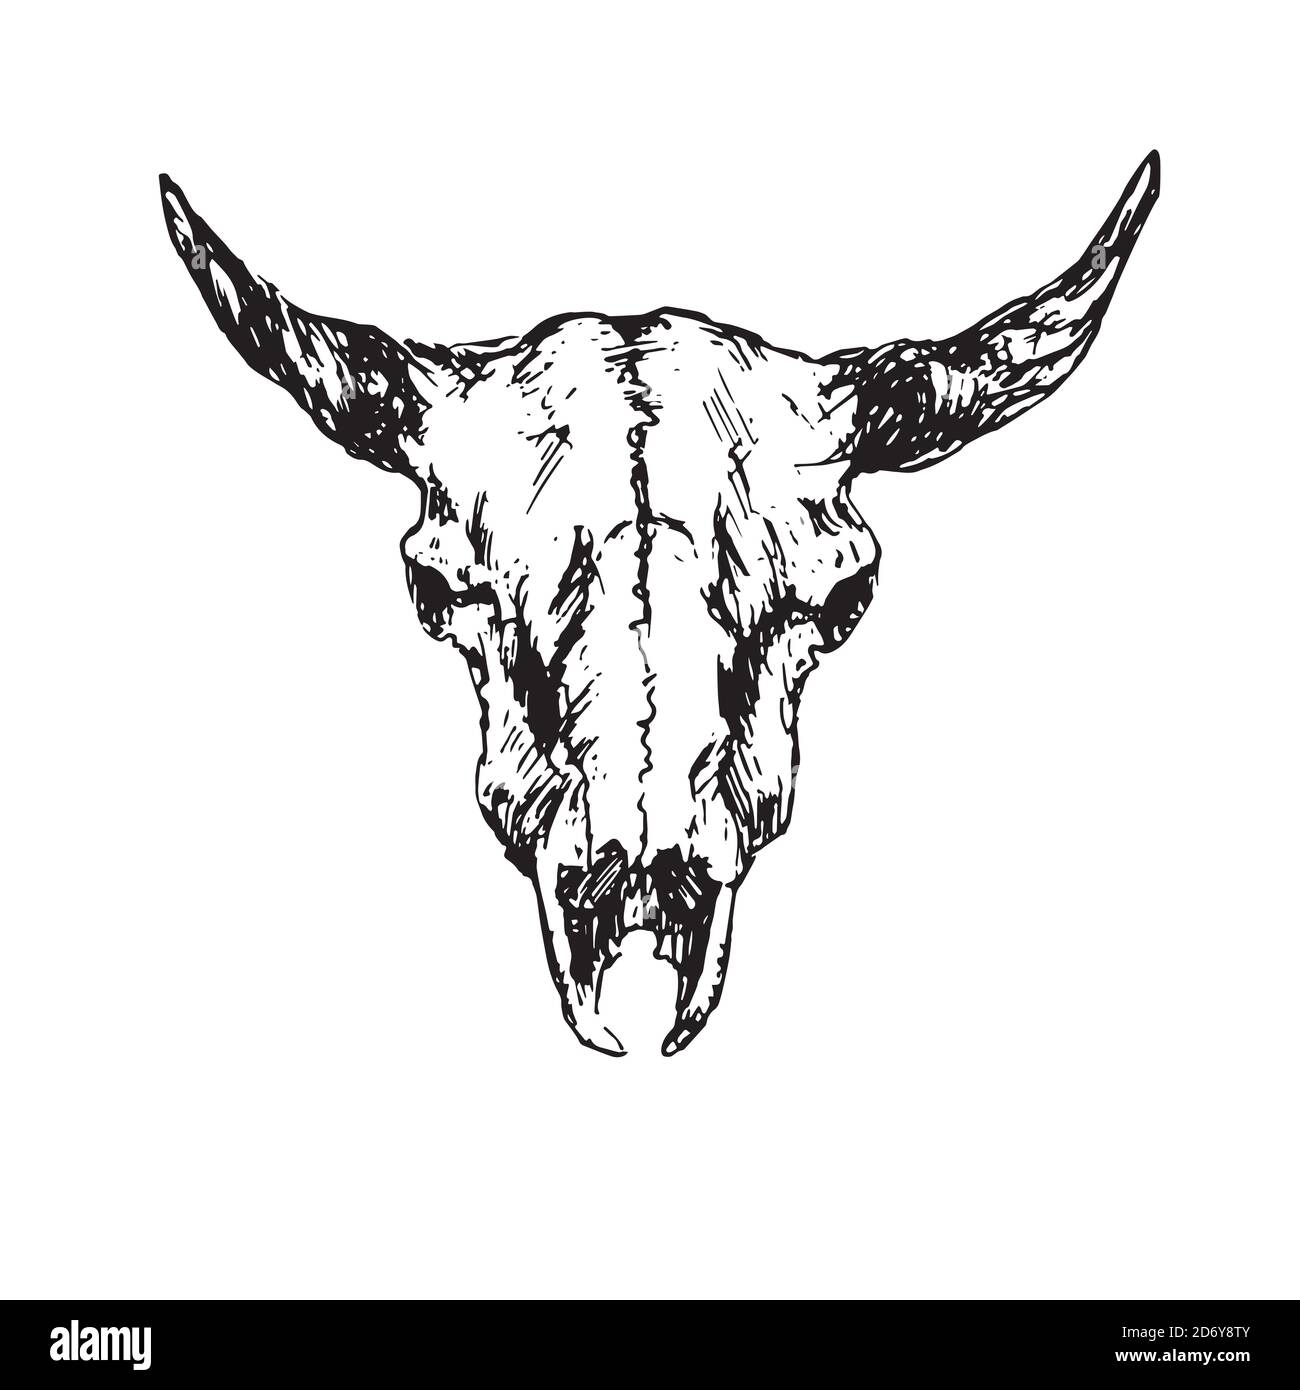 Download Cow Skull Bull RoyaltyFree Vector Graphic  Pixabay